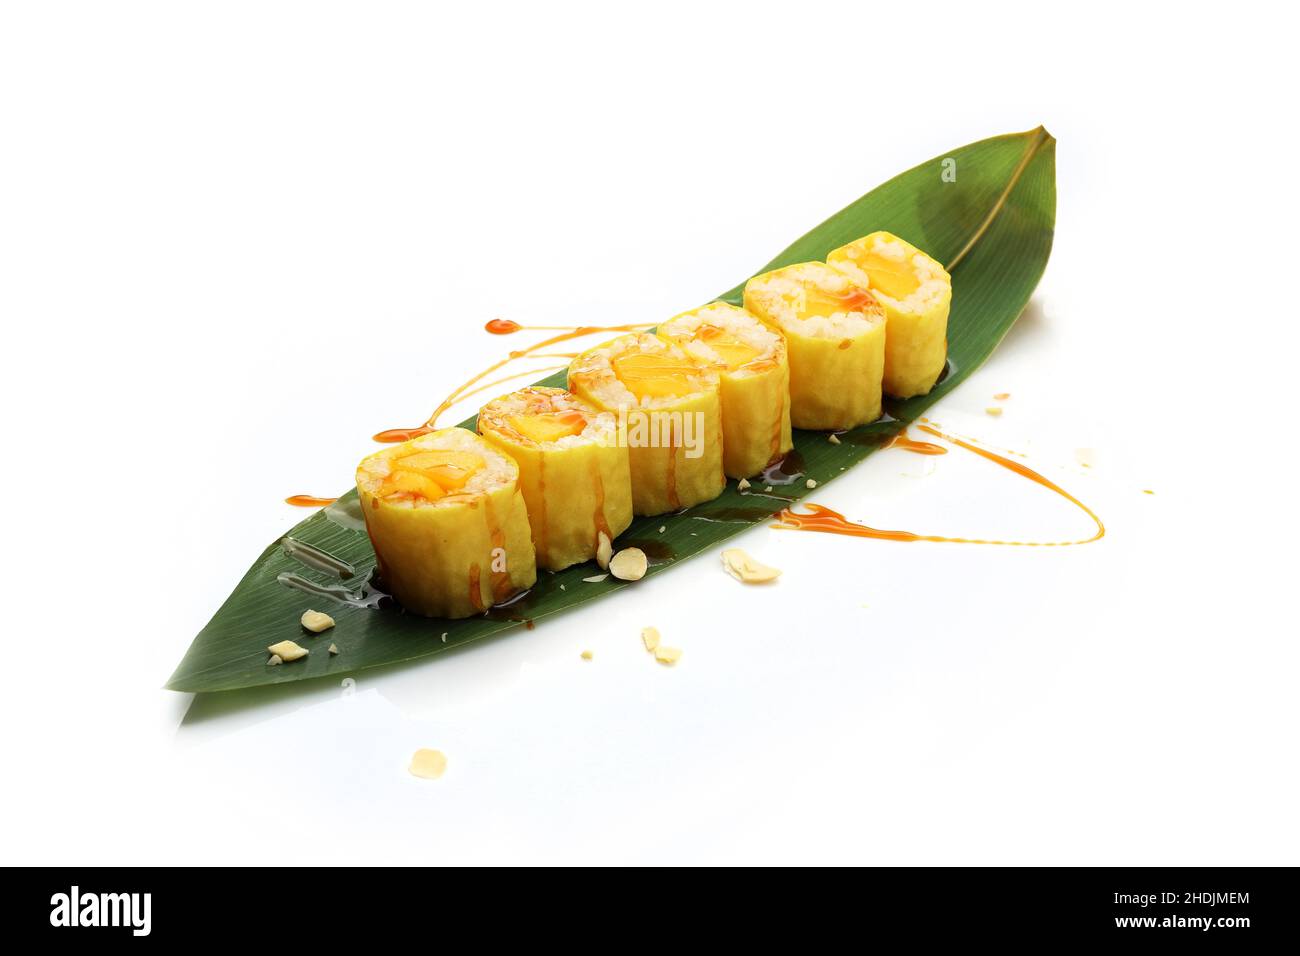 Sushi with yellow turnip and avocado. Sushi rolls on a white background. Traditional Japanese sushi Stock Photo